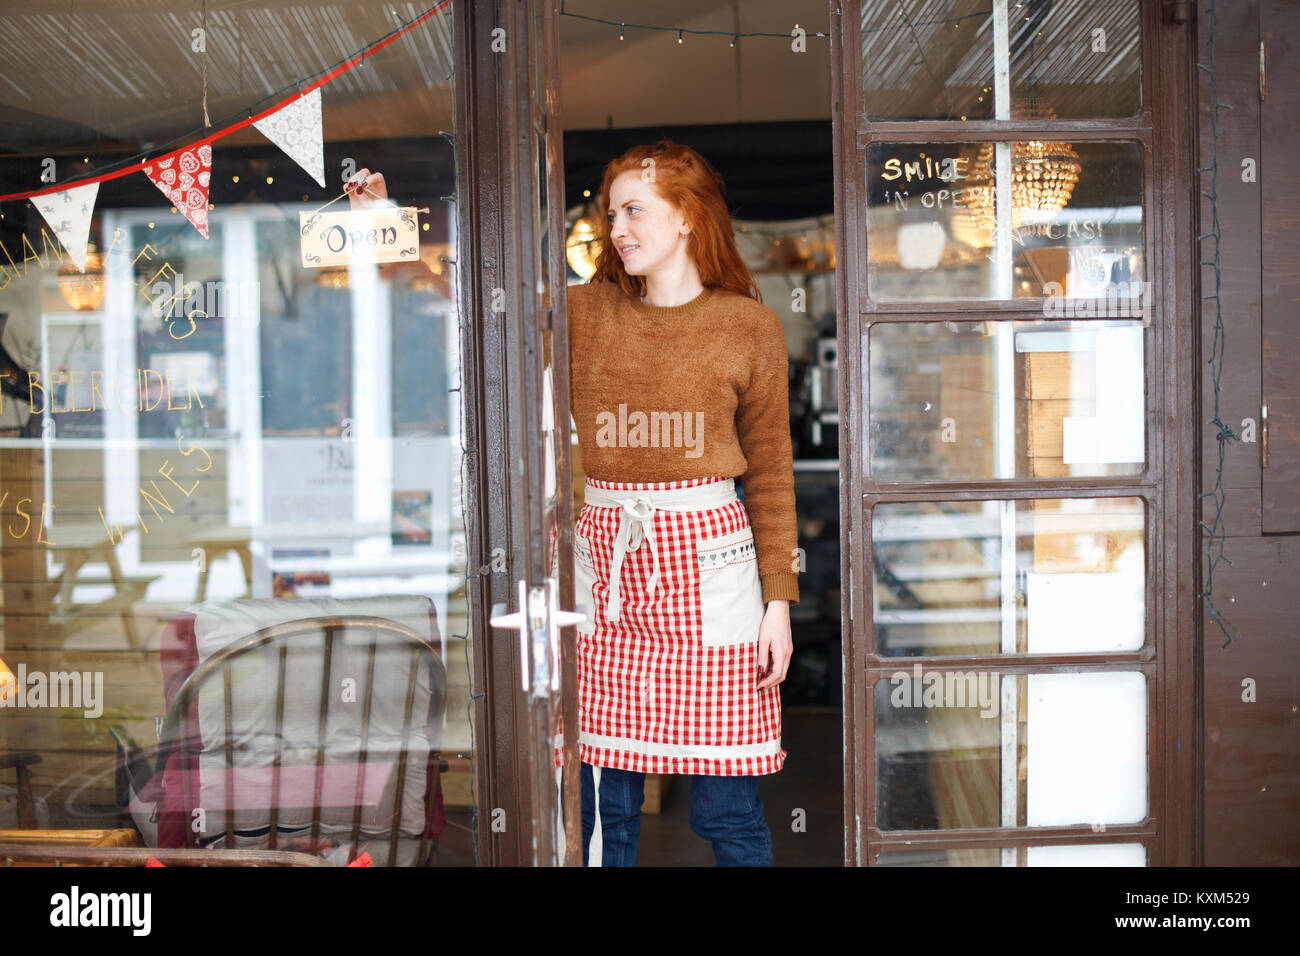 Portrait von Small Business Owner im Cafe Eingang Stockfoto